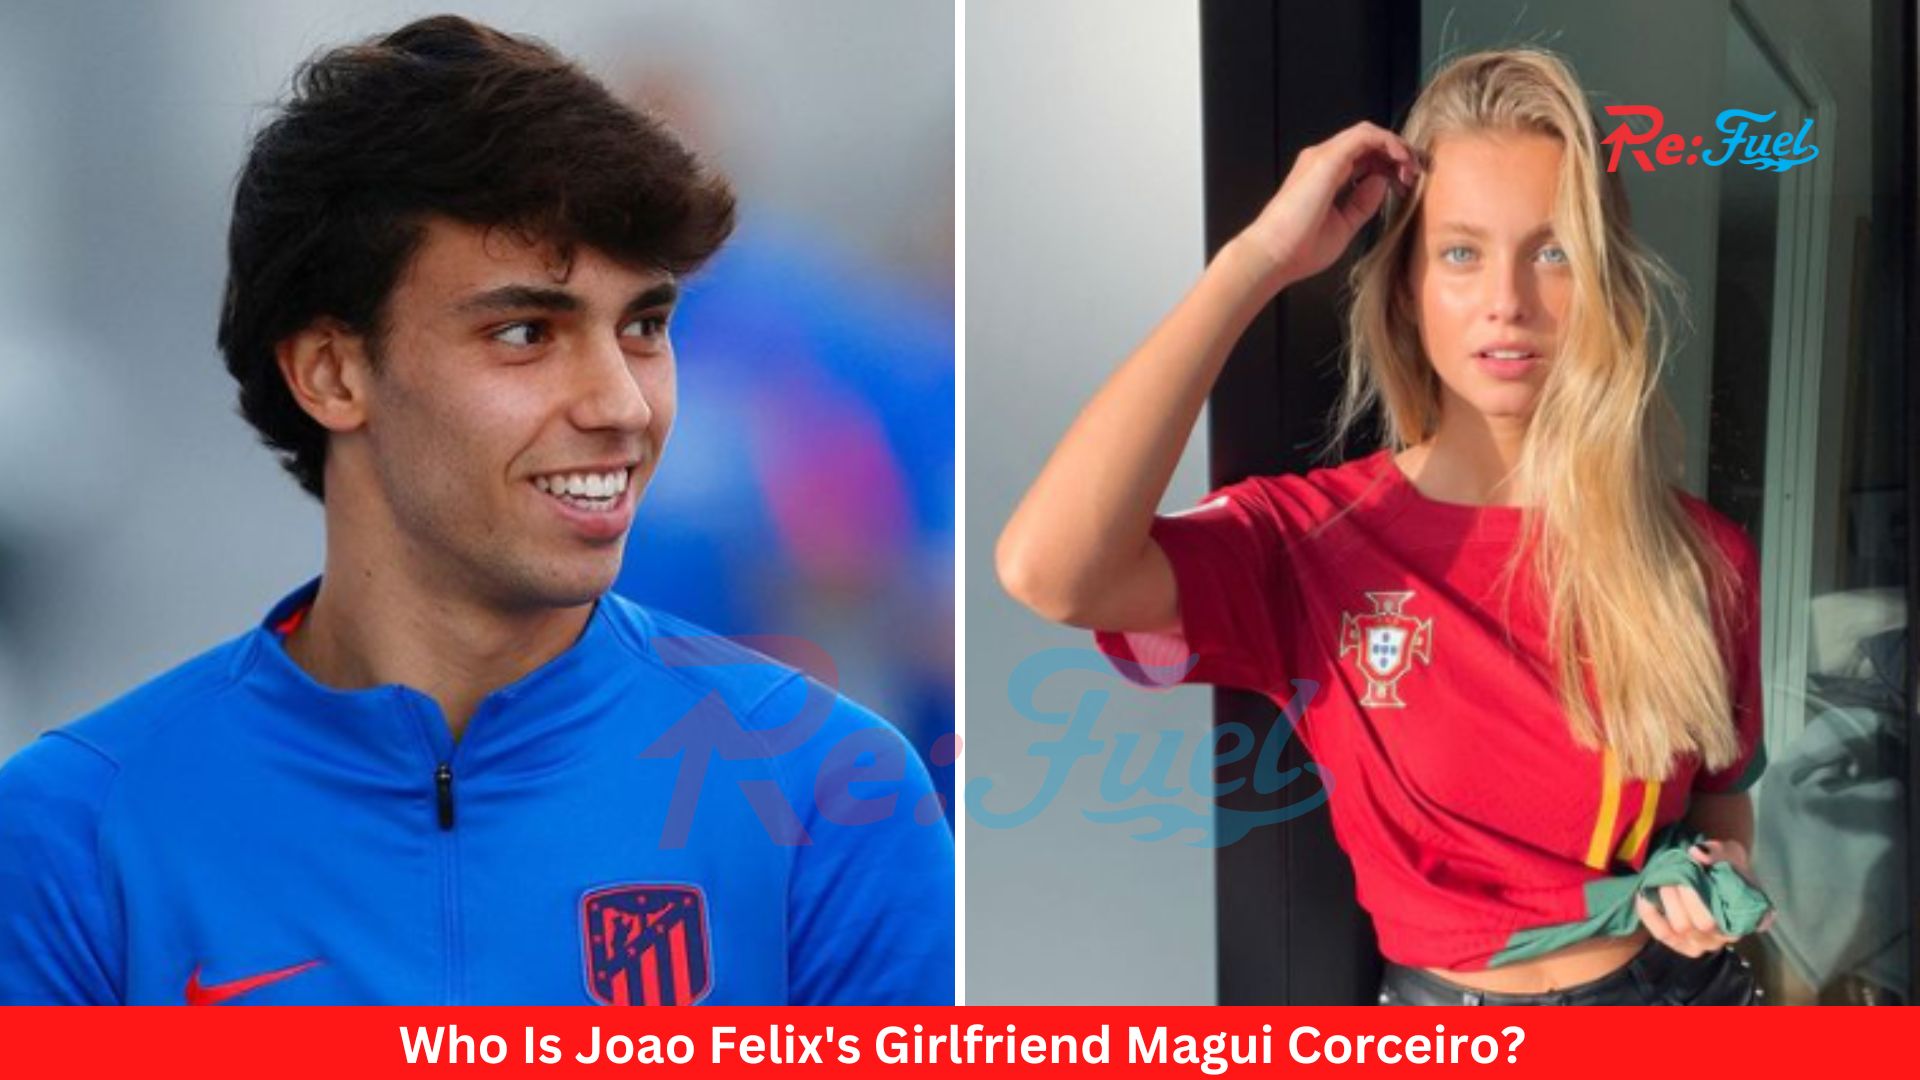 Who Is Joao Felix's Girlfriend Magui Corceiro?